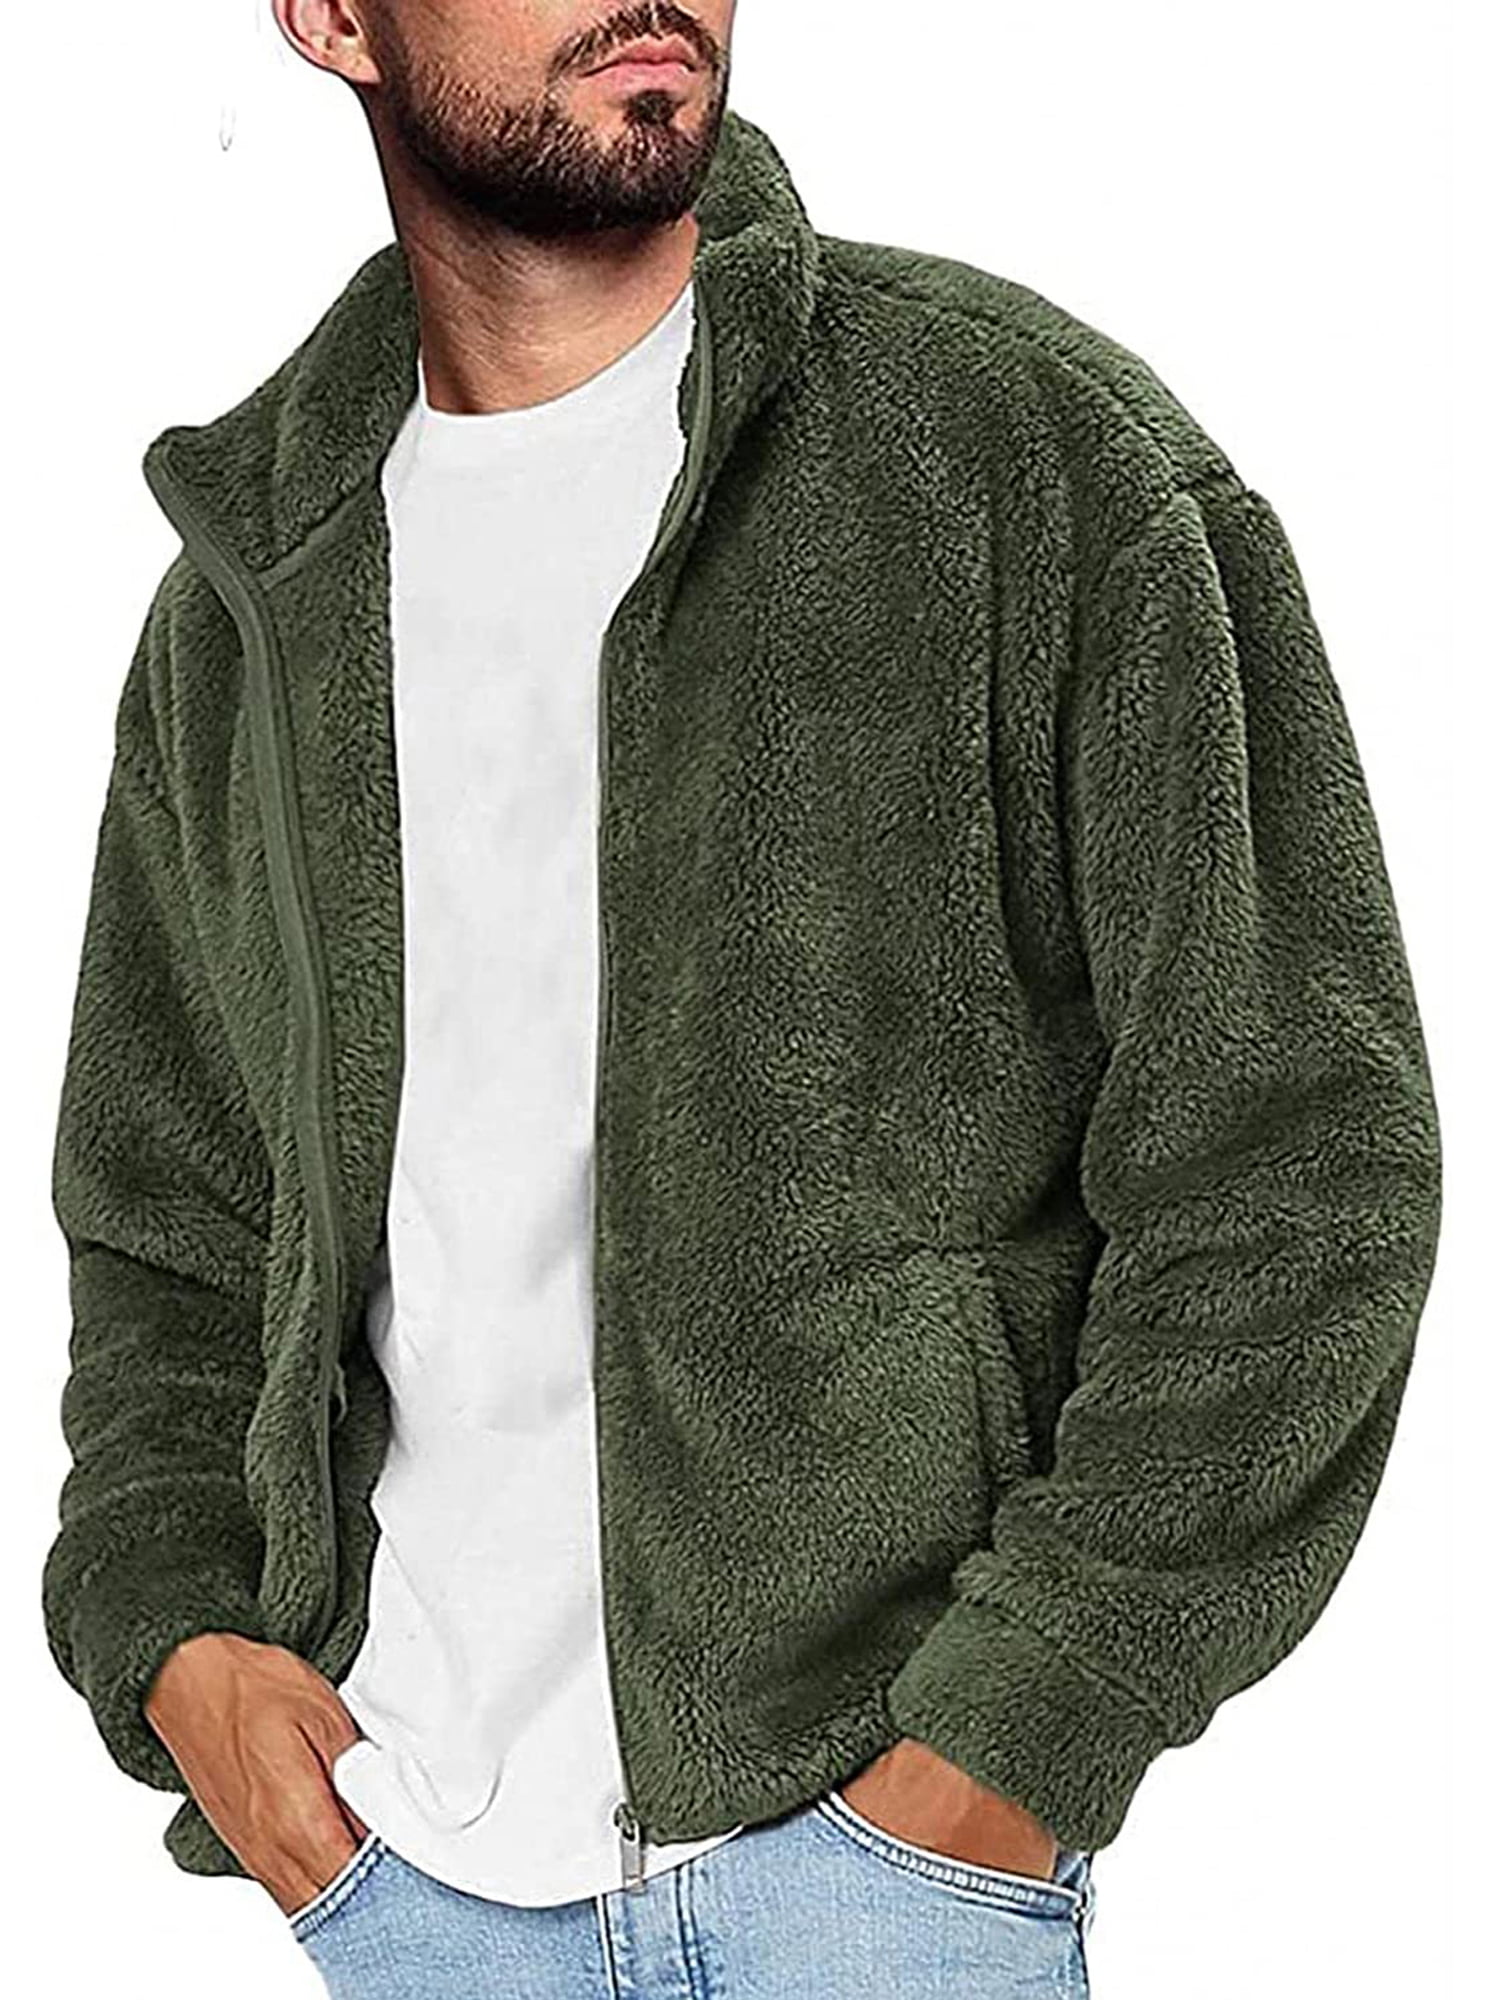 westAce Mens Fleece Jacket Zip Up Polar Outdoor Warm Coat Top & Trousers Set Anti Pill